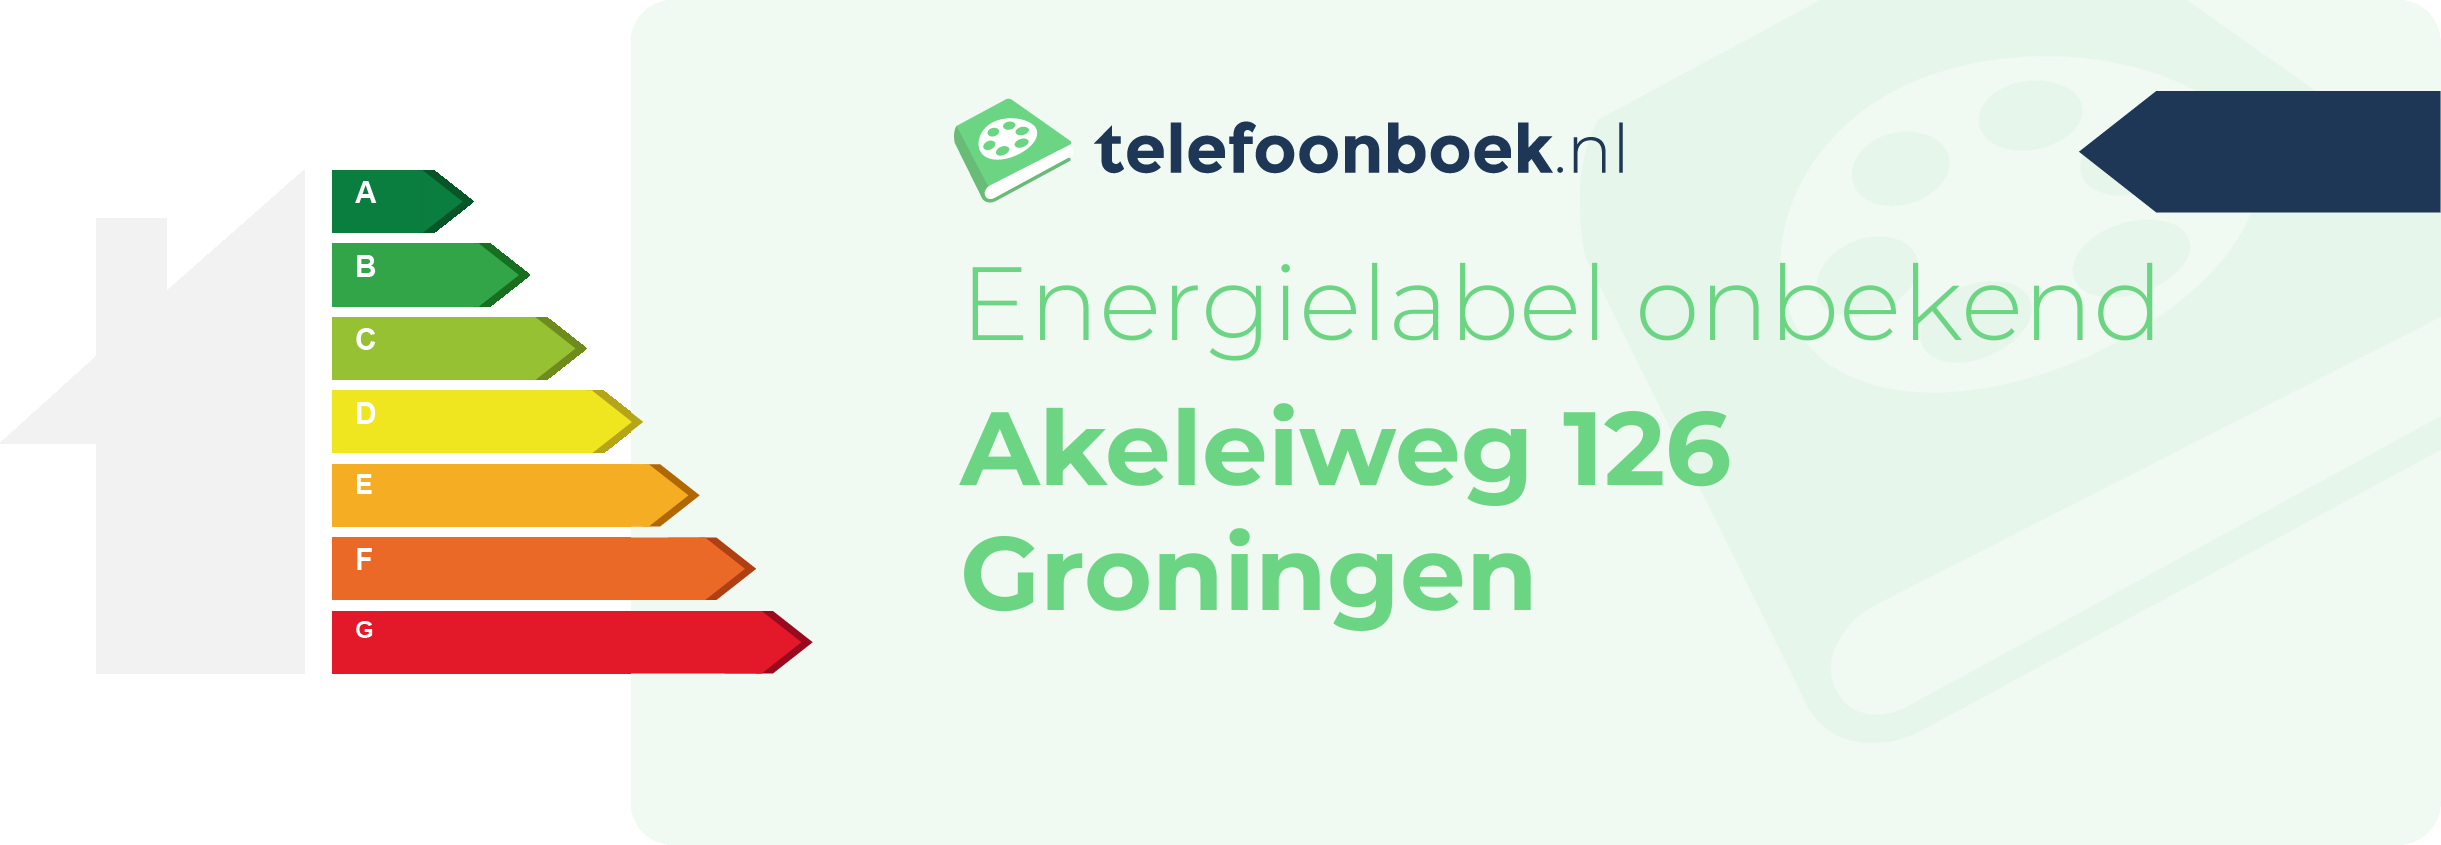 Energielabel Akeleiweg 126 Groningen